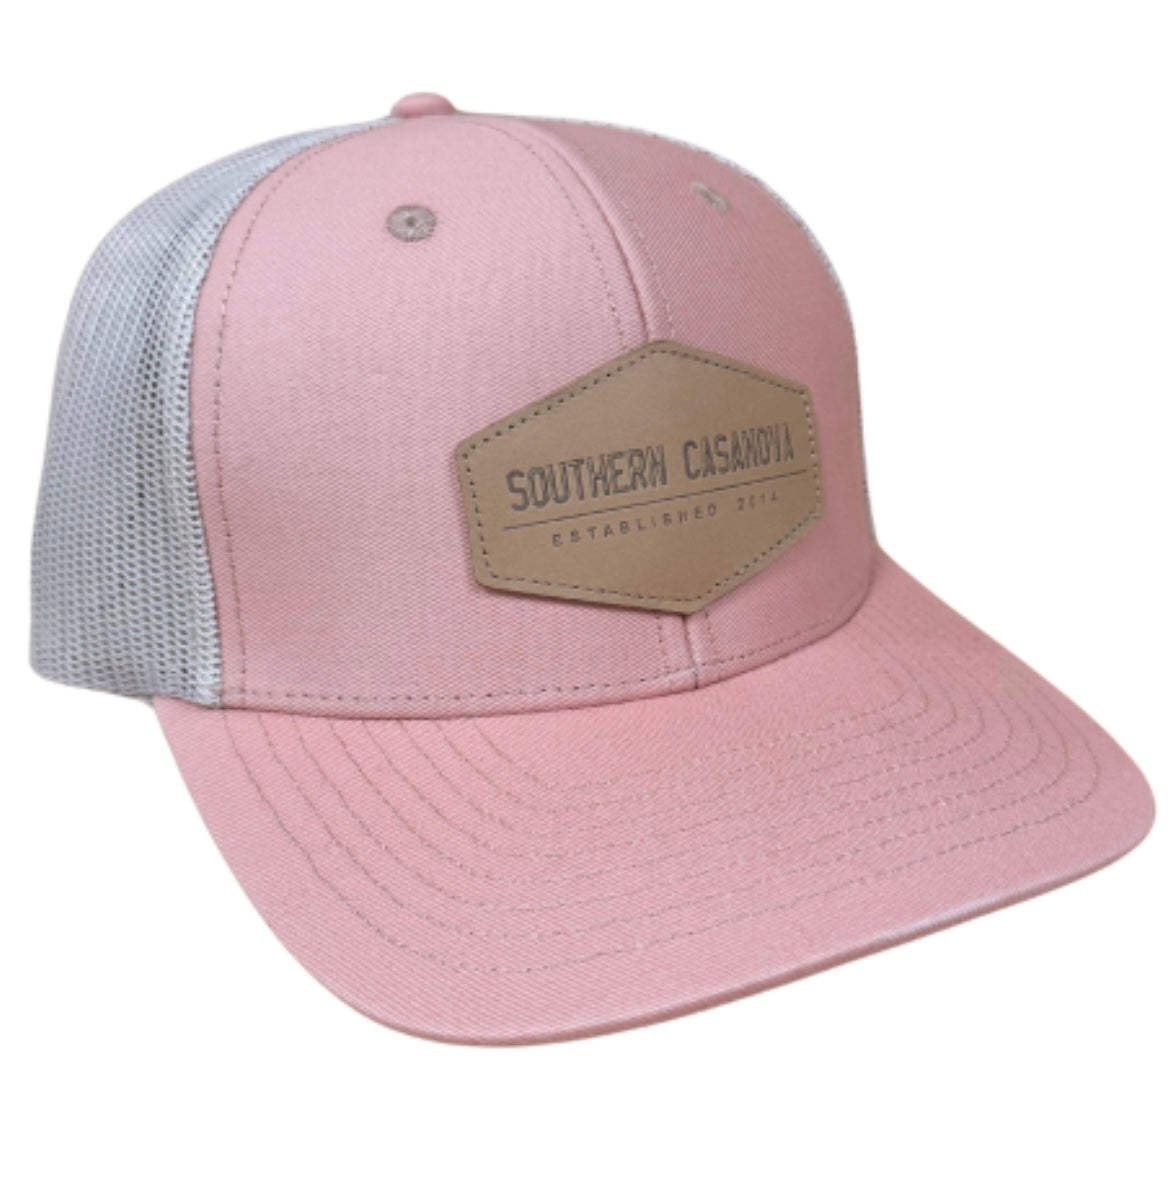 Southern Casanova Signature Trucker Hat